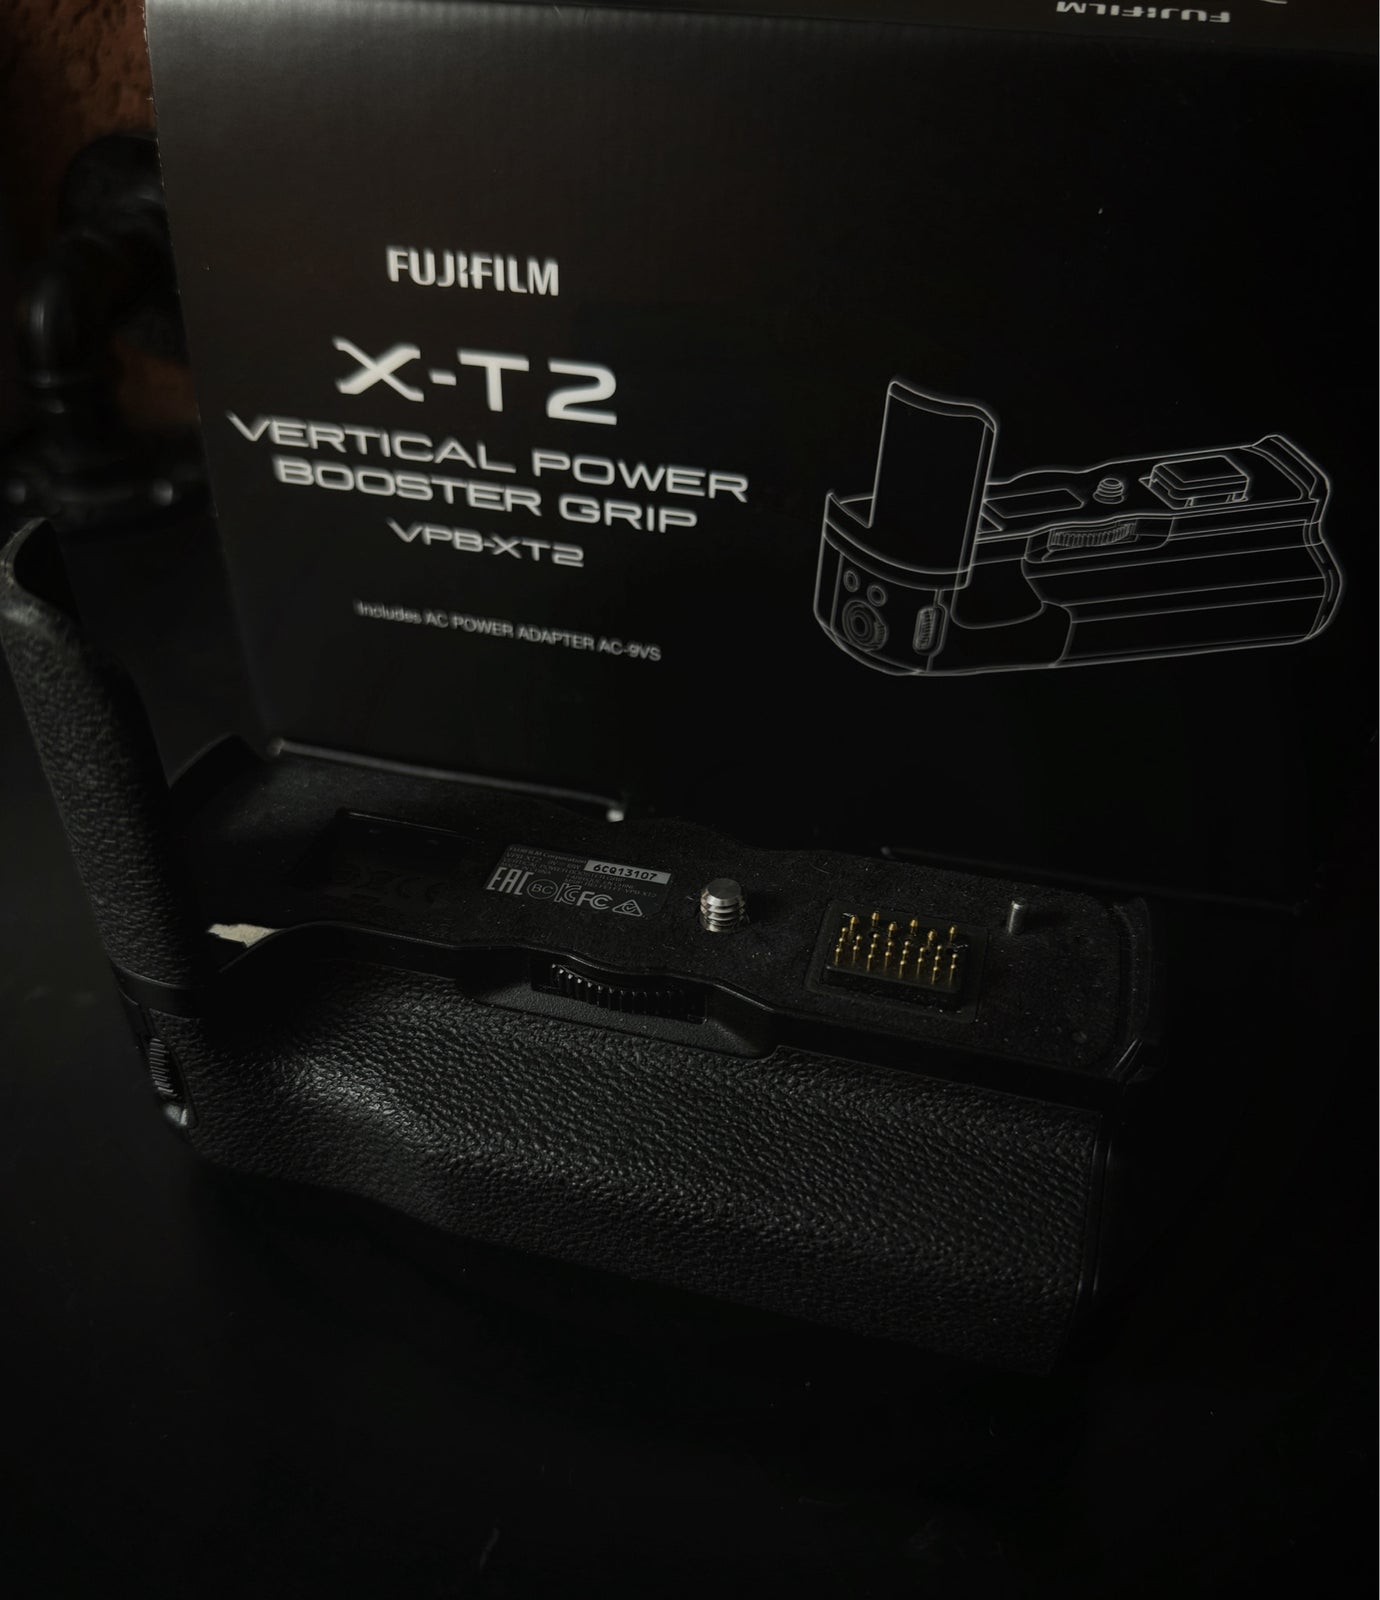 Fuji, X-T2 + Batterigreb , 24 megapixels